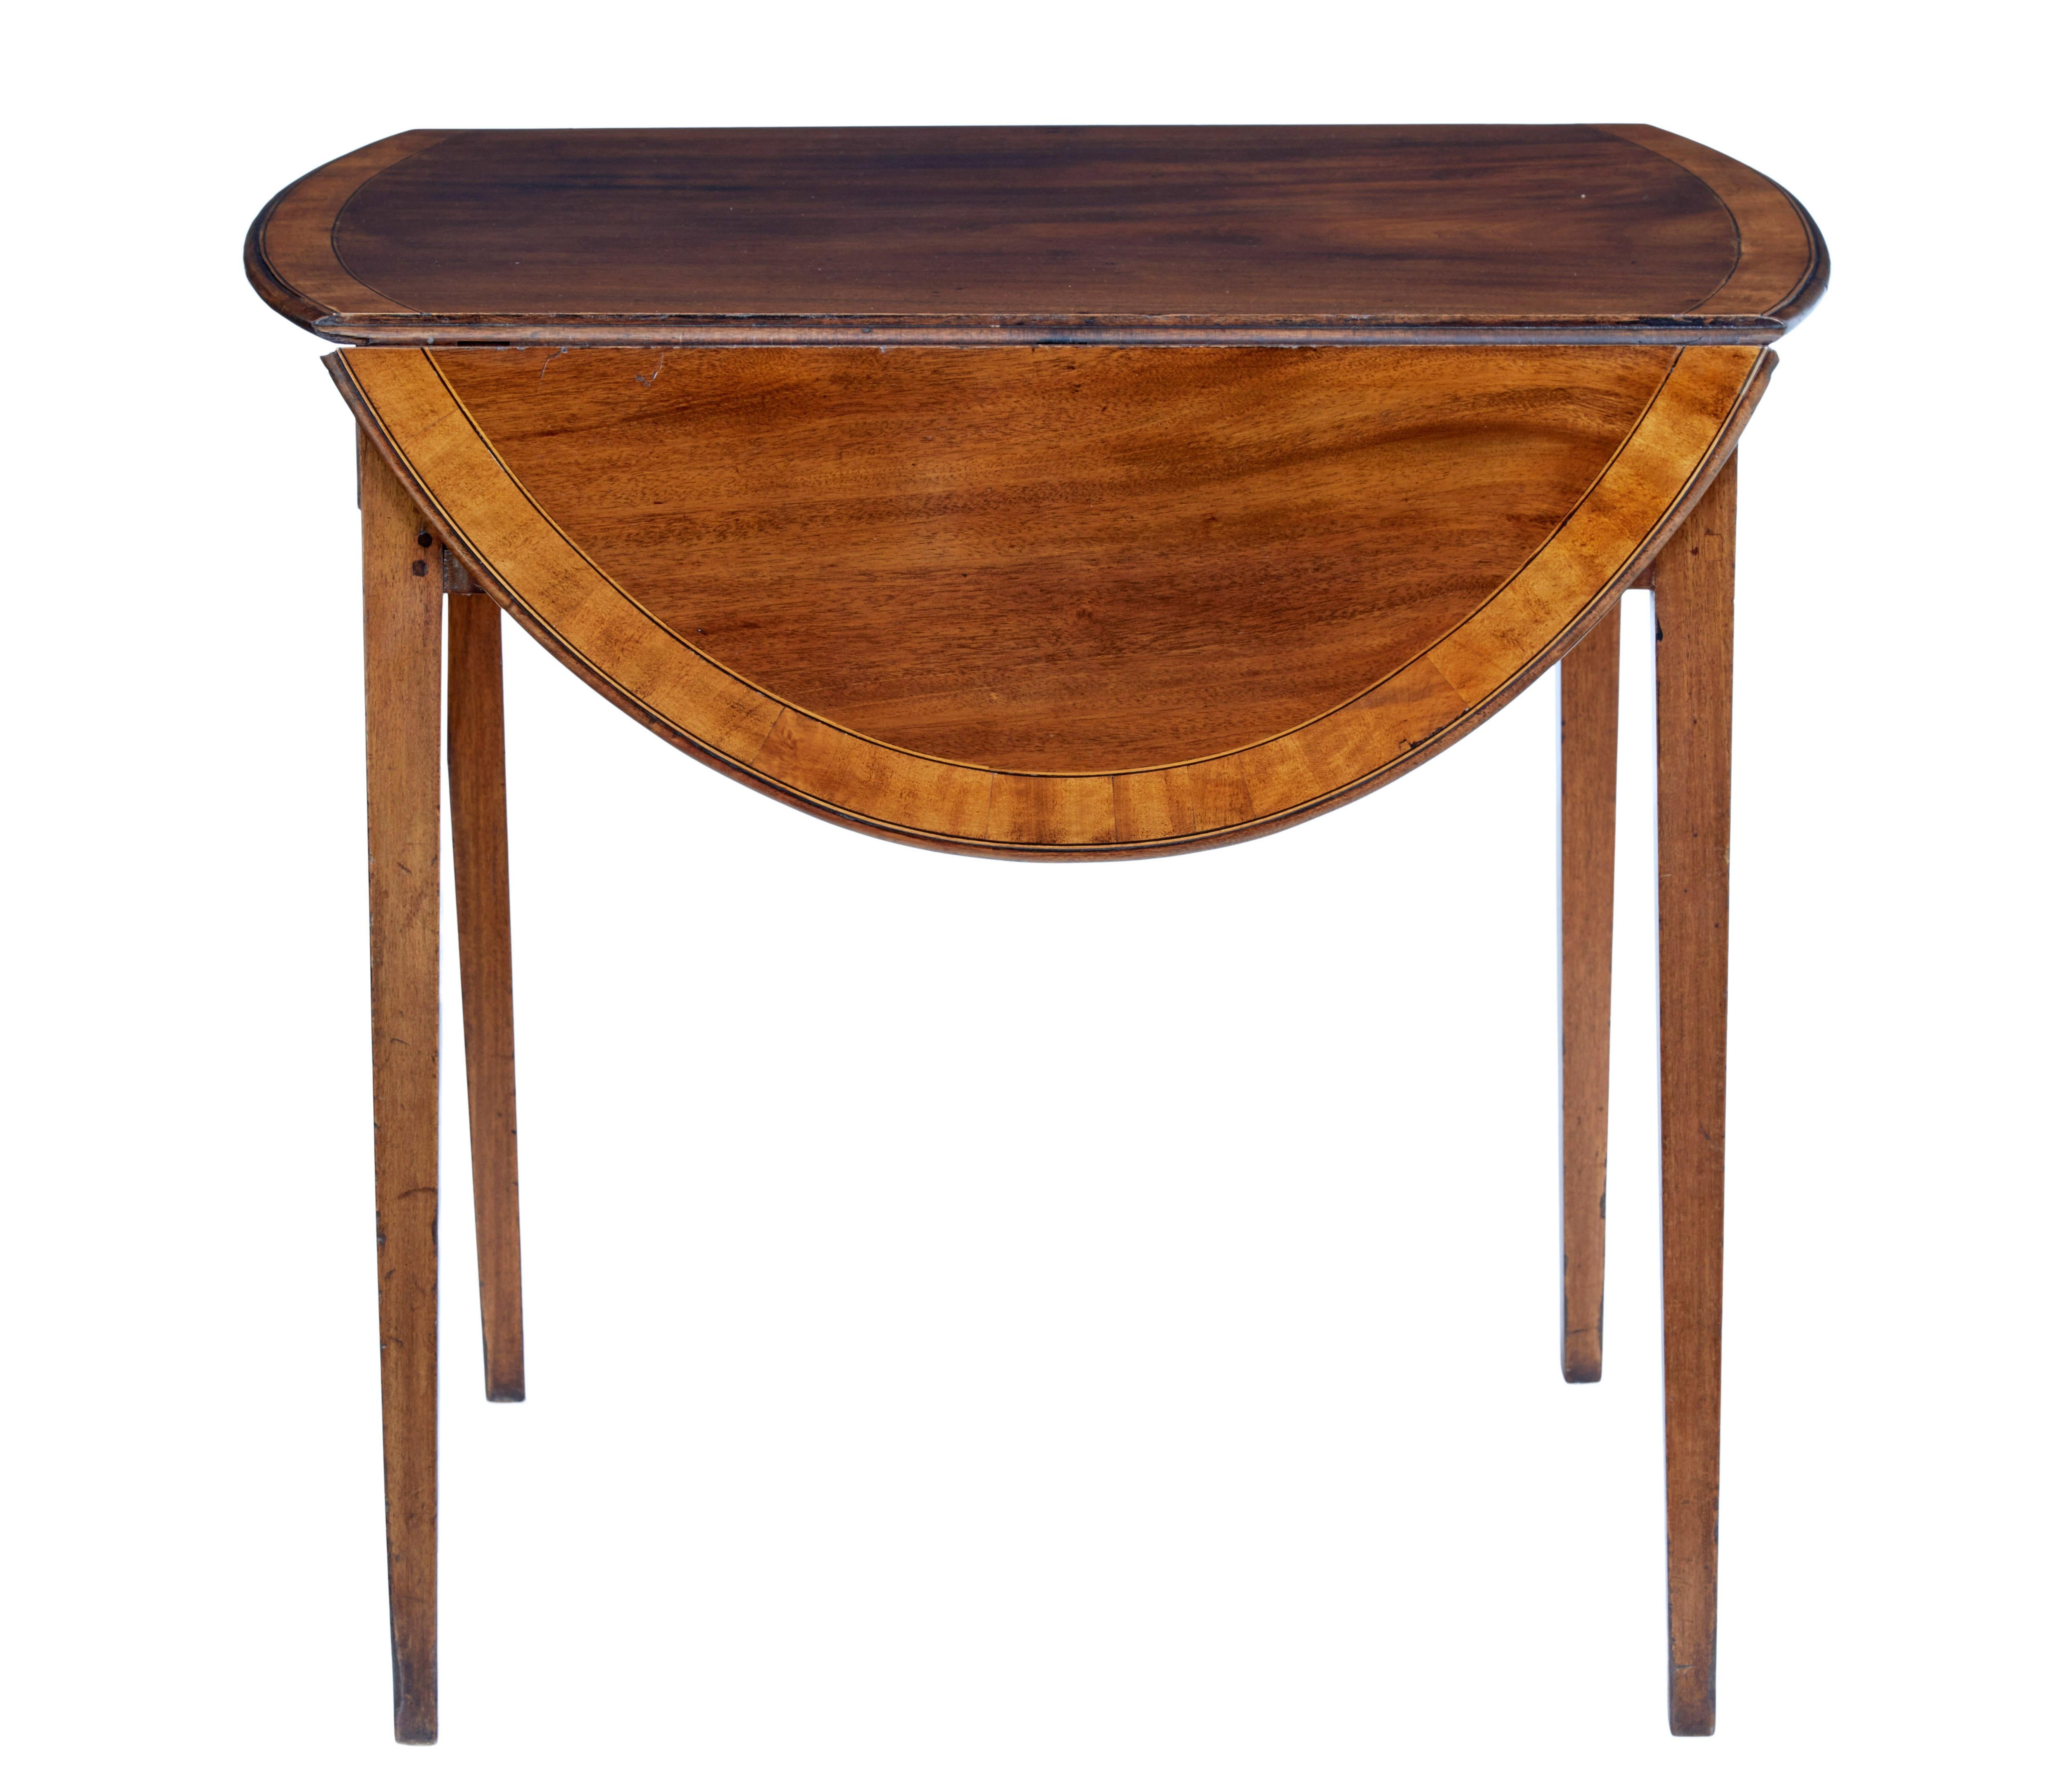 19th Century 19th century late regency mahogany pembroke table For Sale